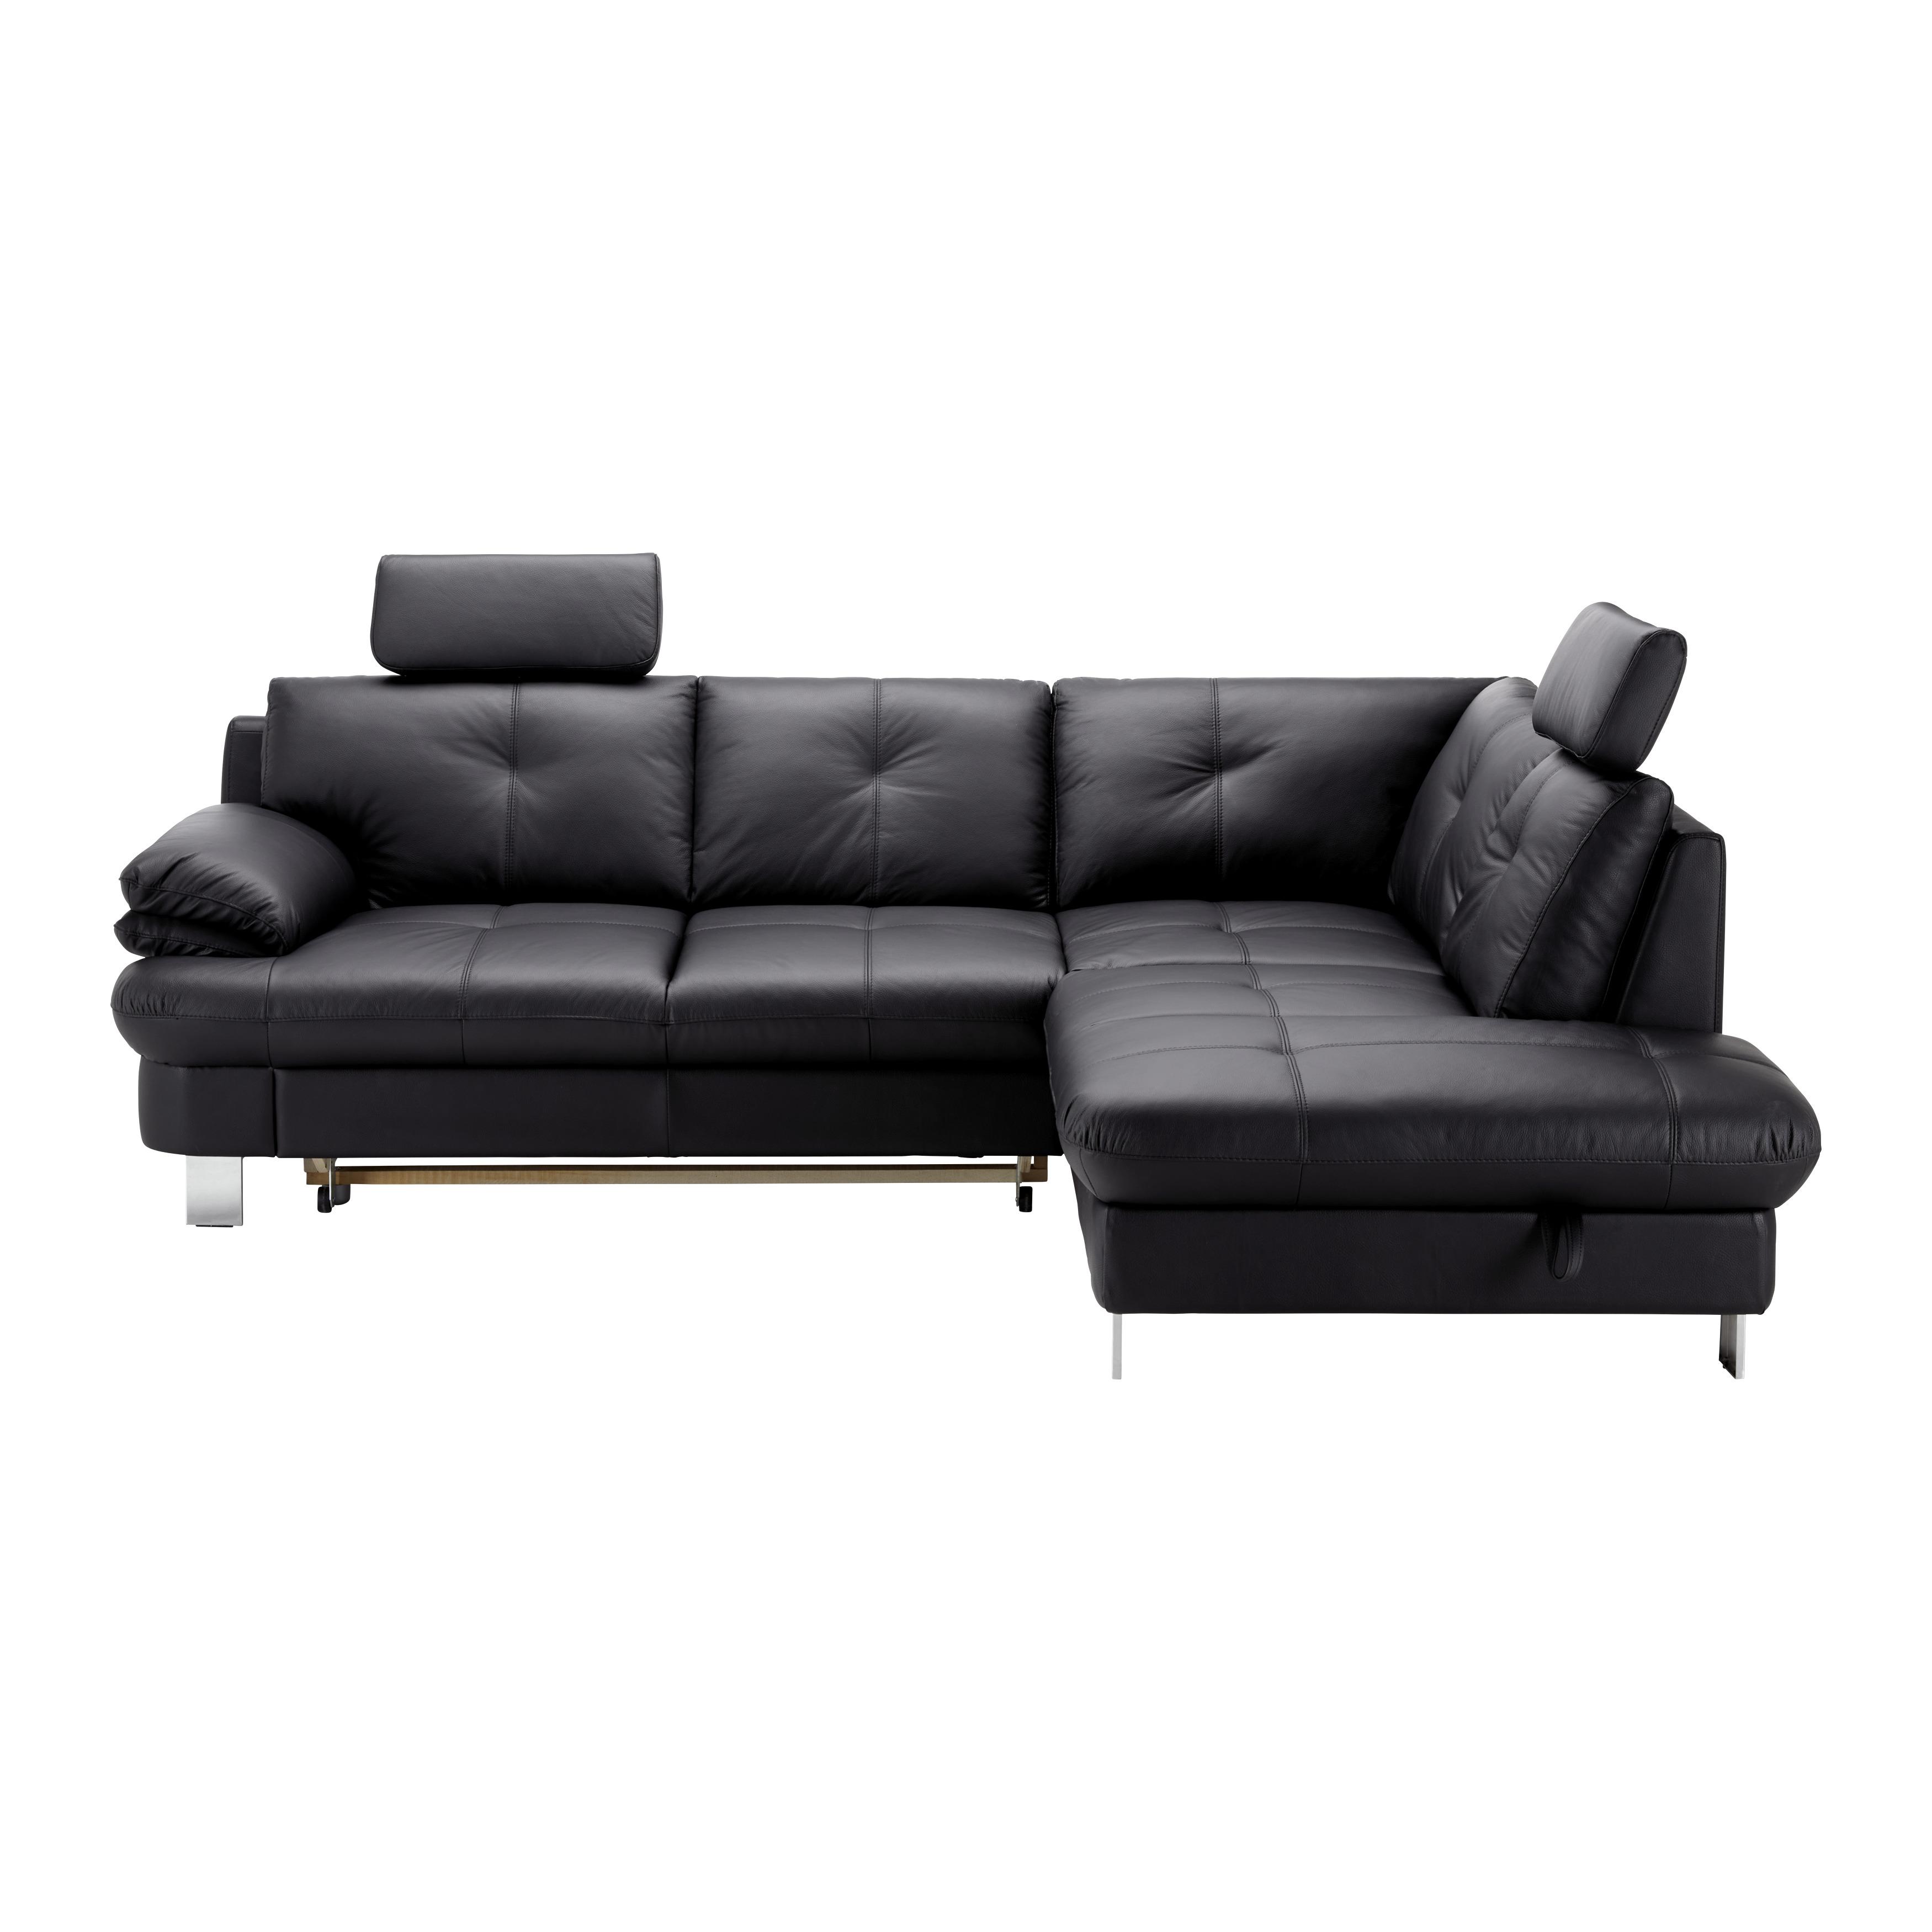 Sedežna Garnitura Bernadette Ii - črna/krom, Moderno, kovina/tekstil (247/82/185cm) - Bessagi Home